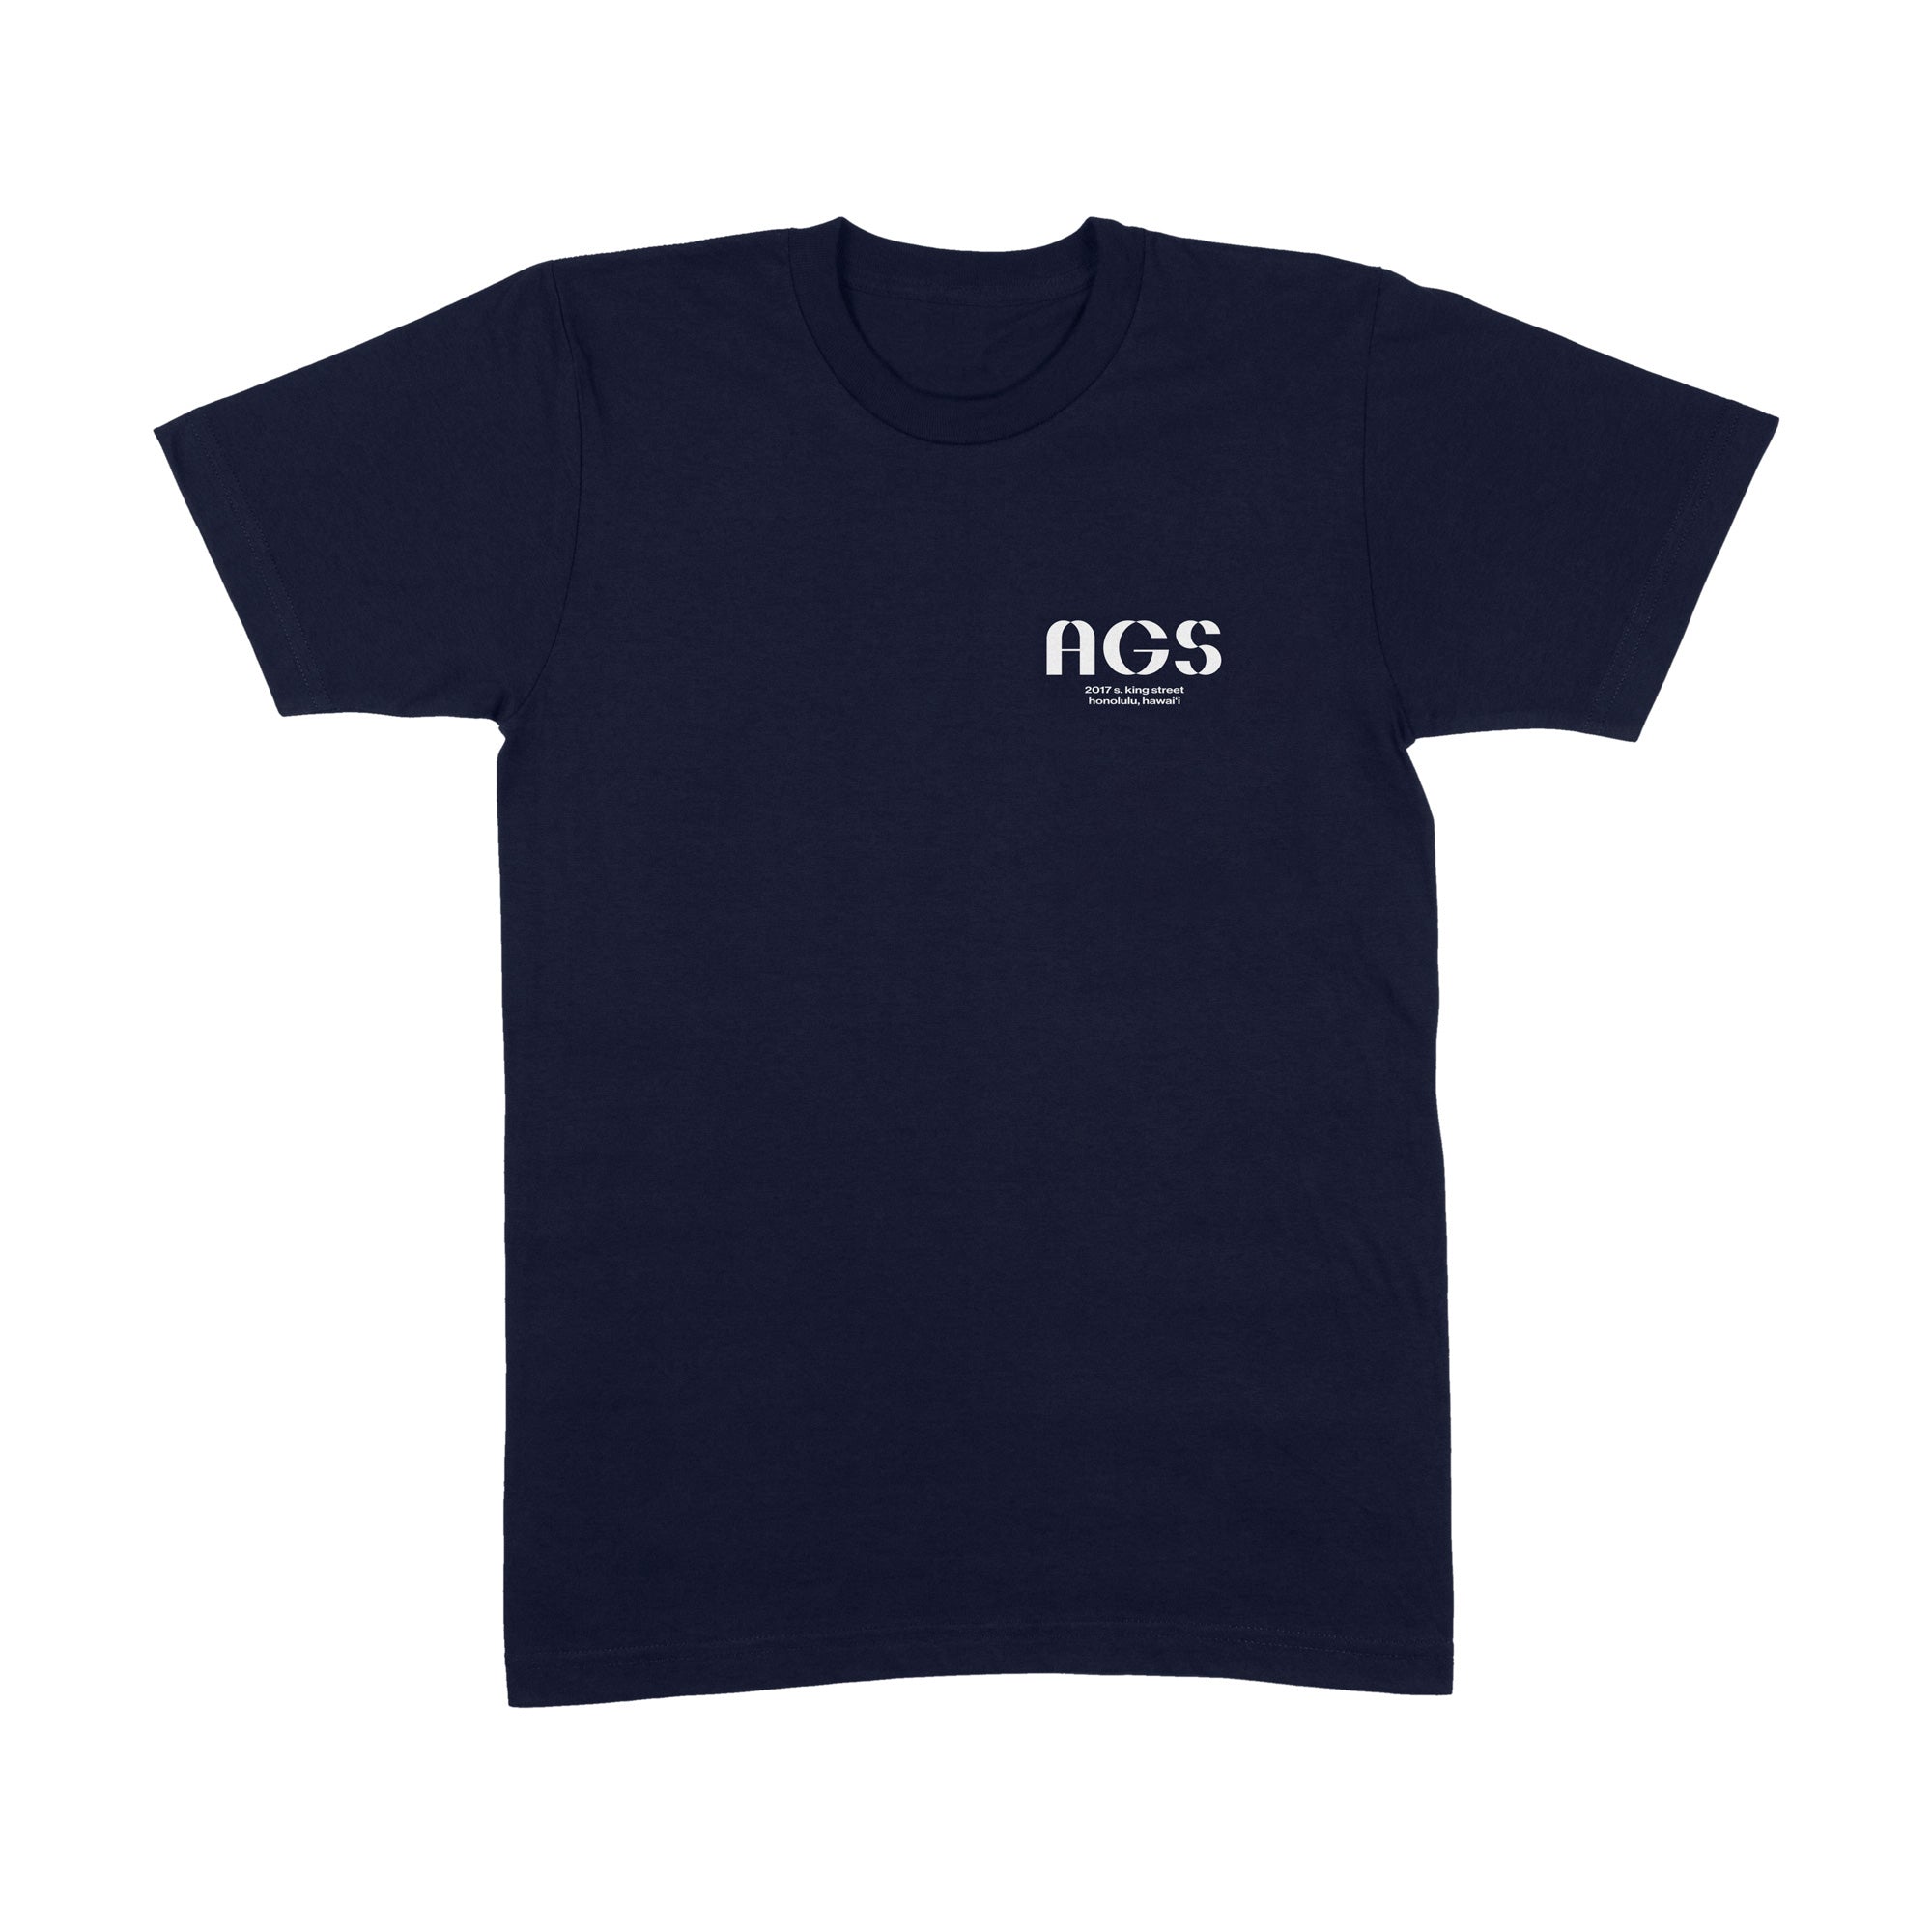 AGS Shop Tee T-shirt (Navy)